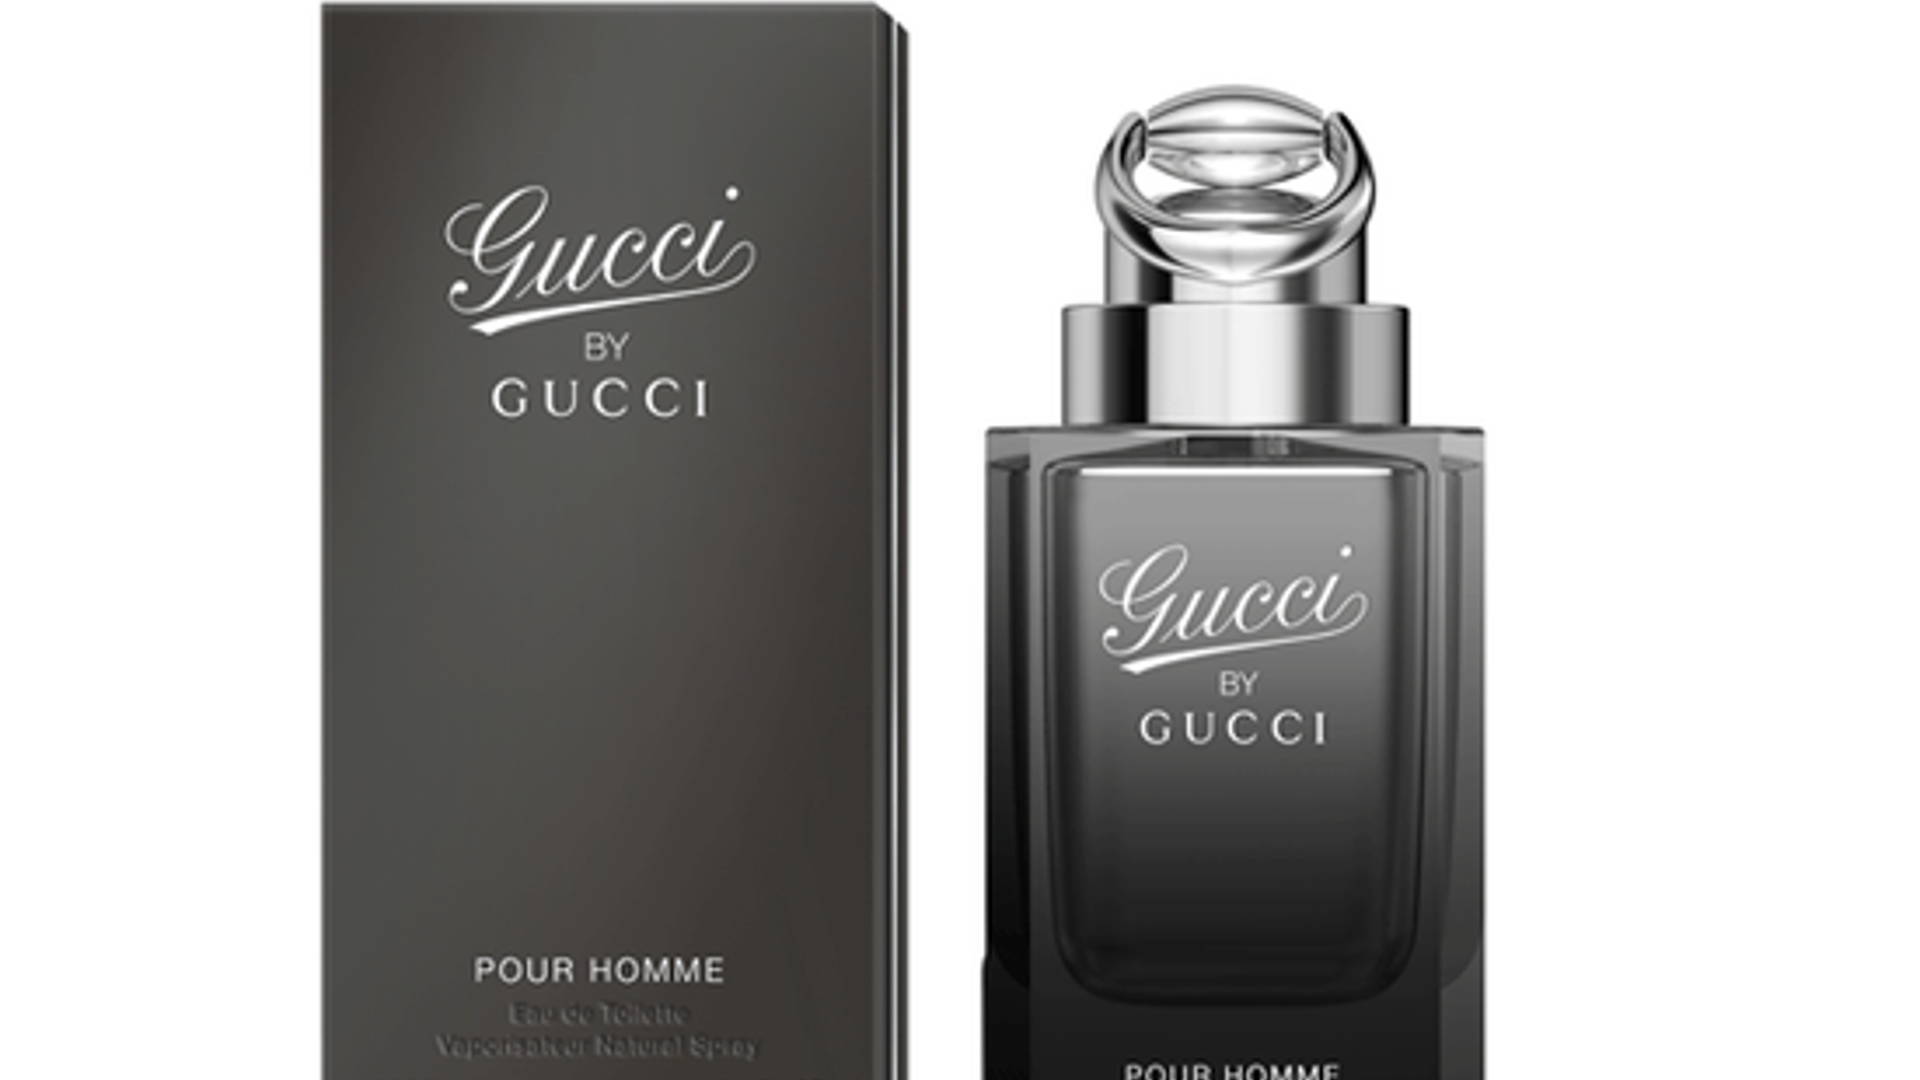 Gucci pour homme купить. Gucci by Gucci pour homme EDT, 90 ml. Gucci "Gucci pour homme" 100 ml. Gucci by Gucci pour homme. Туалетная вода мужская 90 мл Gucci by Gucci.